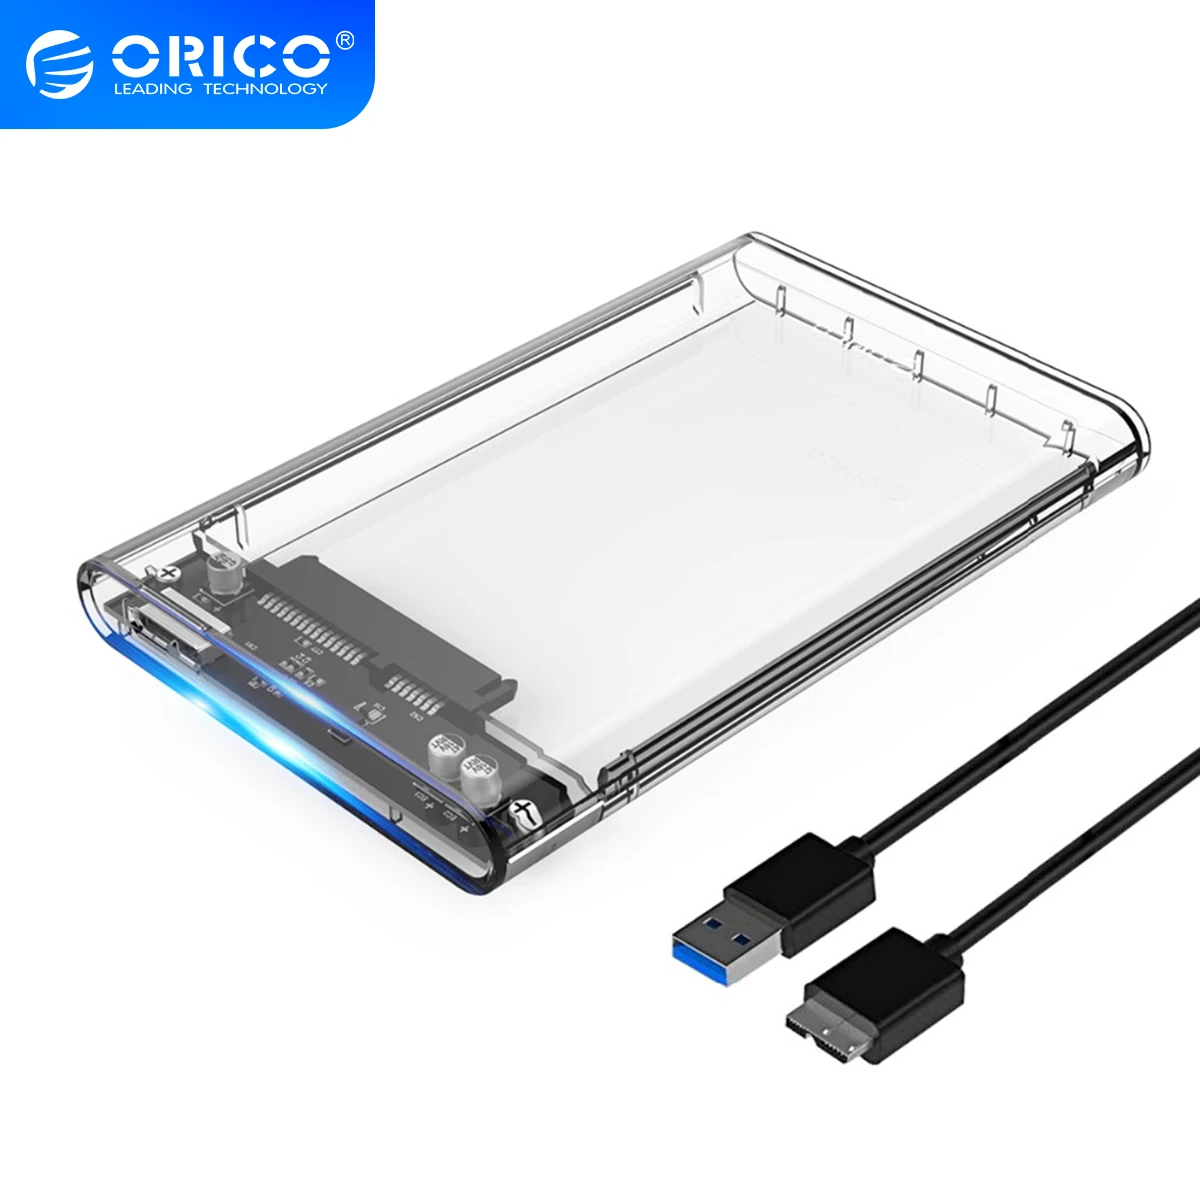 

ORICO 2139U3 Hard Drive Enclosure 2.5 inch Transparent USB3.0 Hard Drive Enclosure Support UASP Protocol for 7-9.5 mm HDD